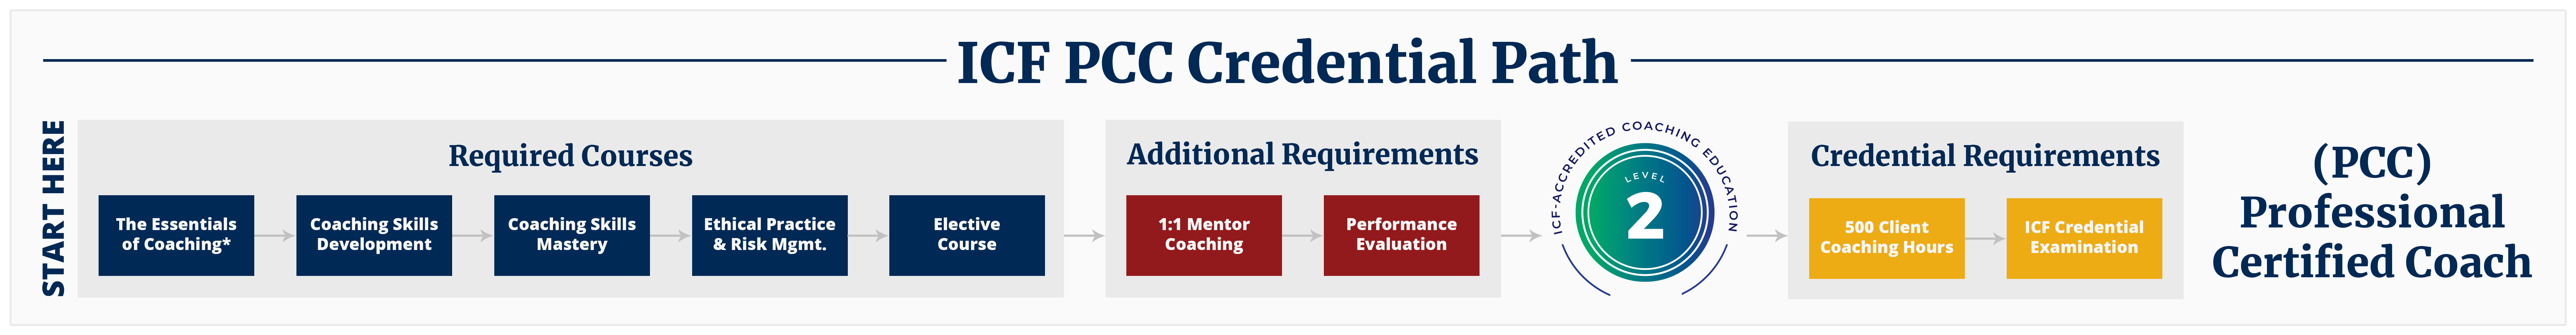 ICF PCC Credential Path